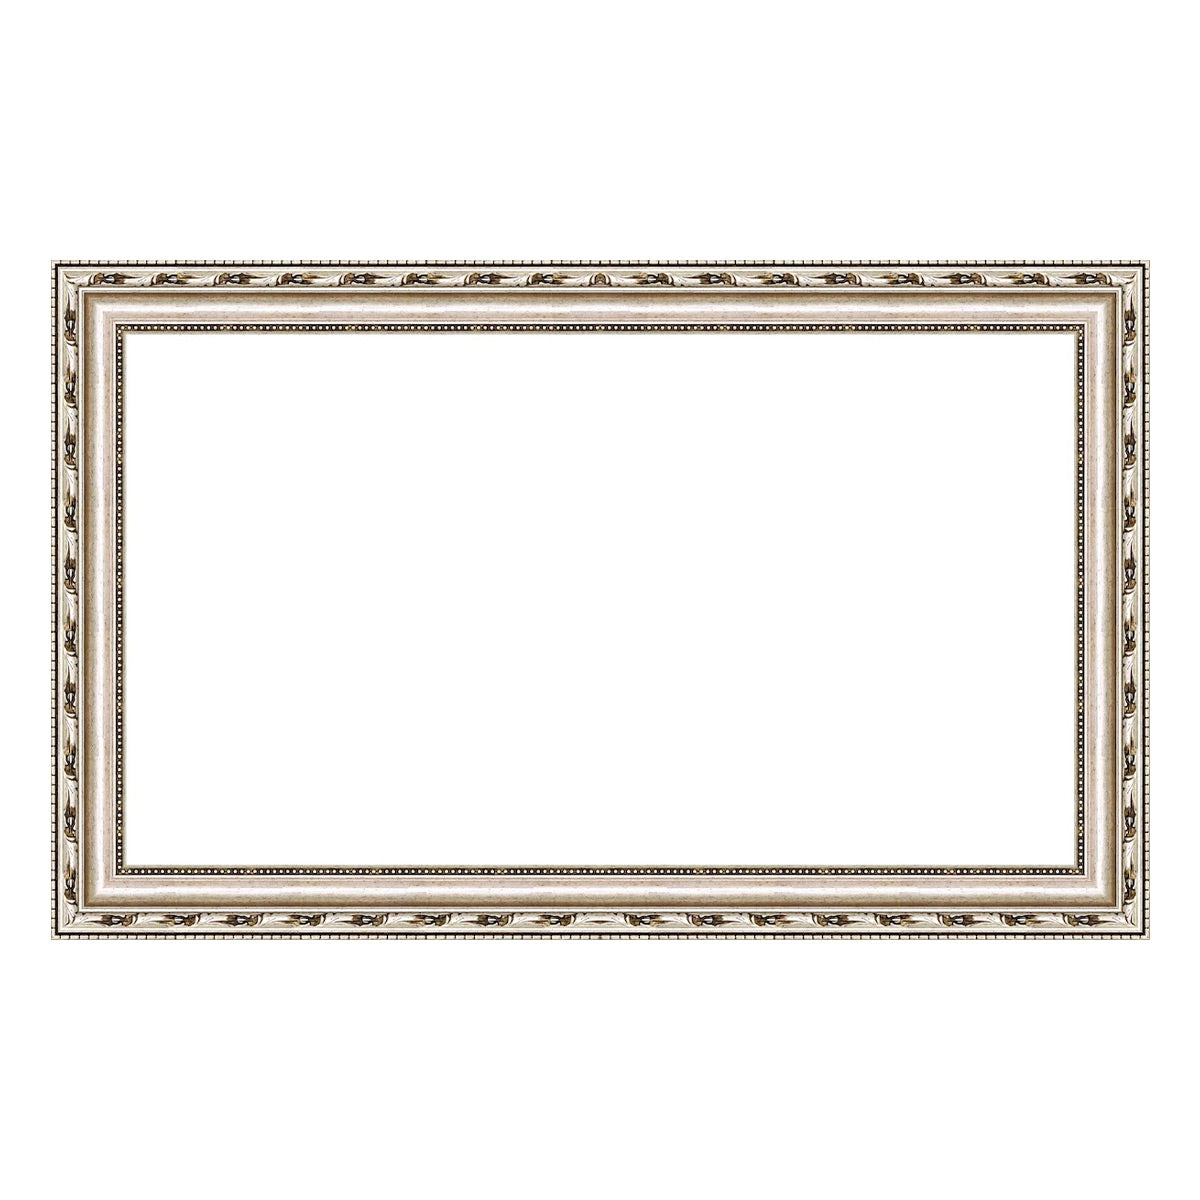 Deco TV Frames 65" Customizable Frame for Samsung The Frame TV 2021-2023 (Ornate Silver)